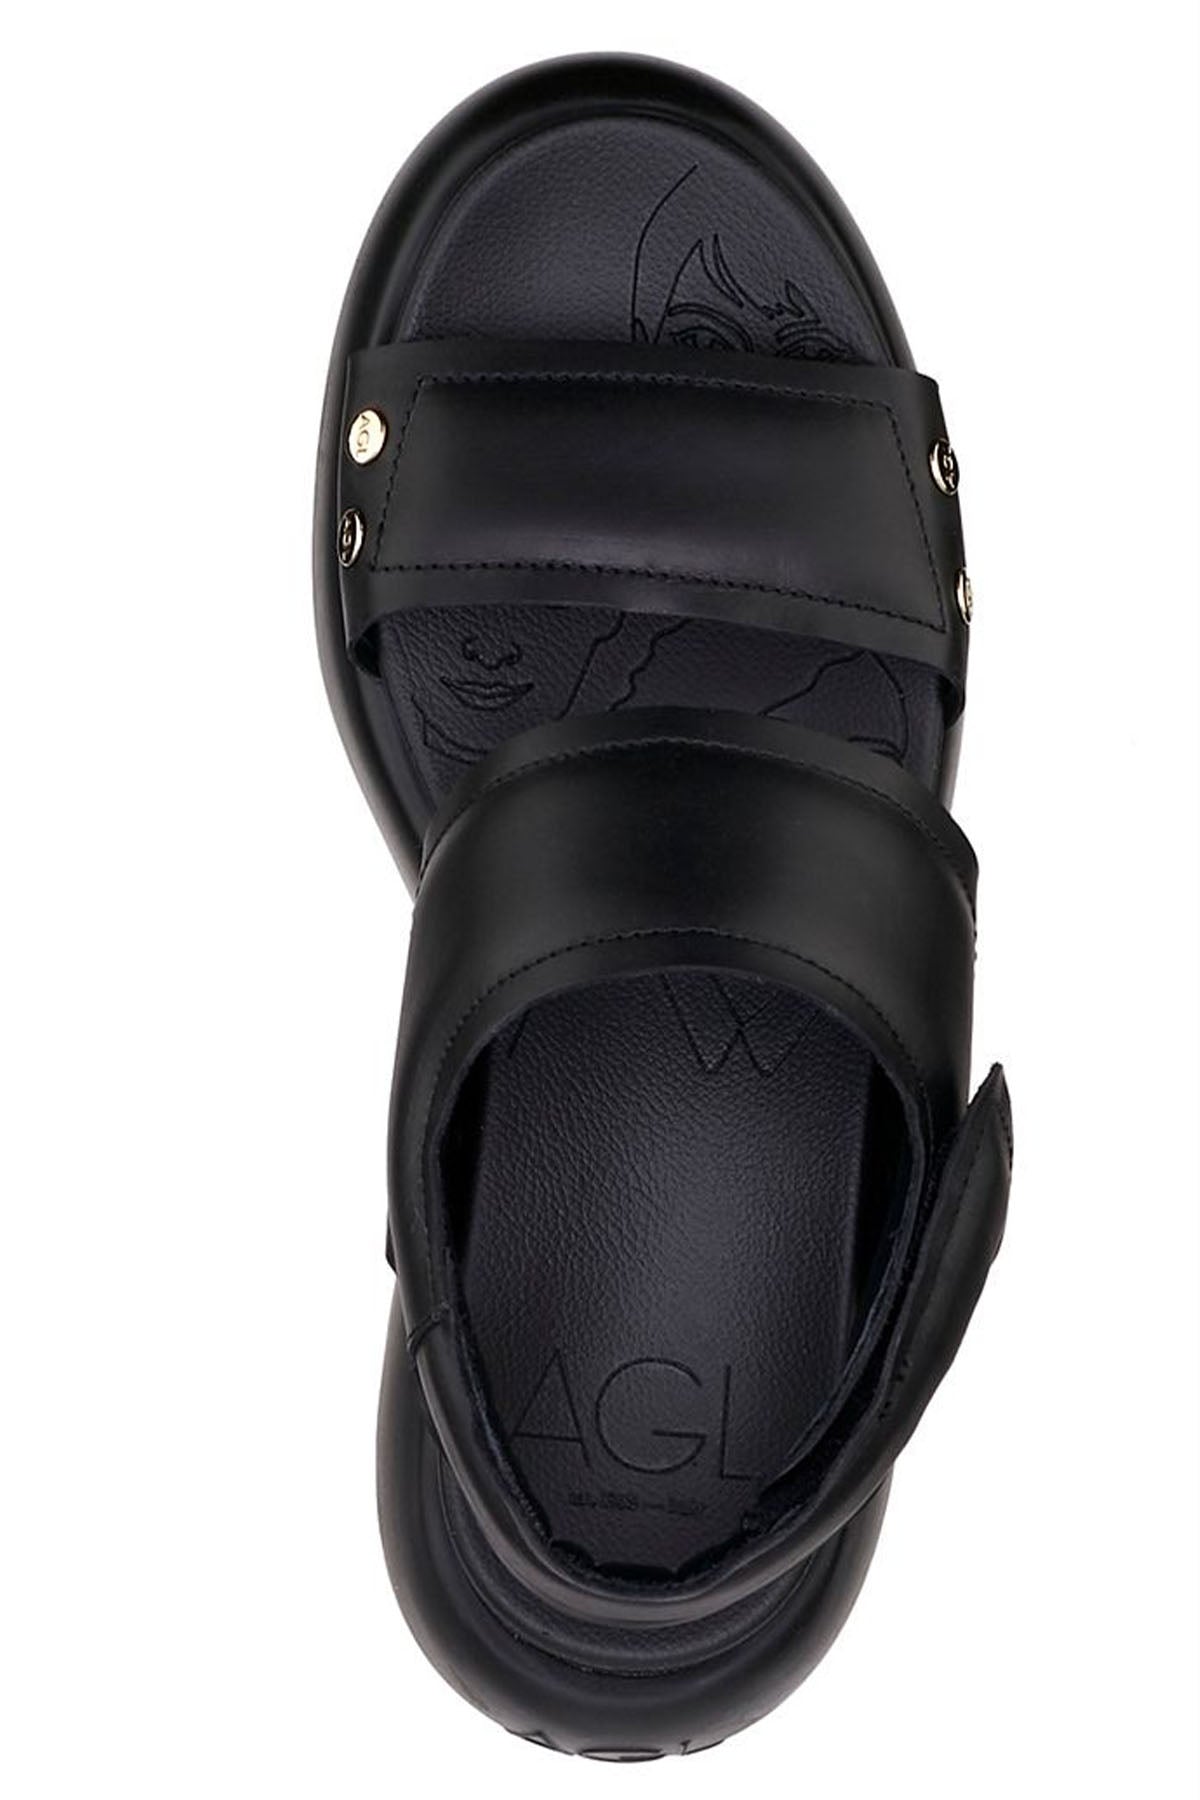 Agl Puffy Yastıklı Deri Sandalet-Libas Trendy Fashion Store